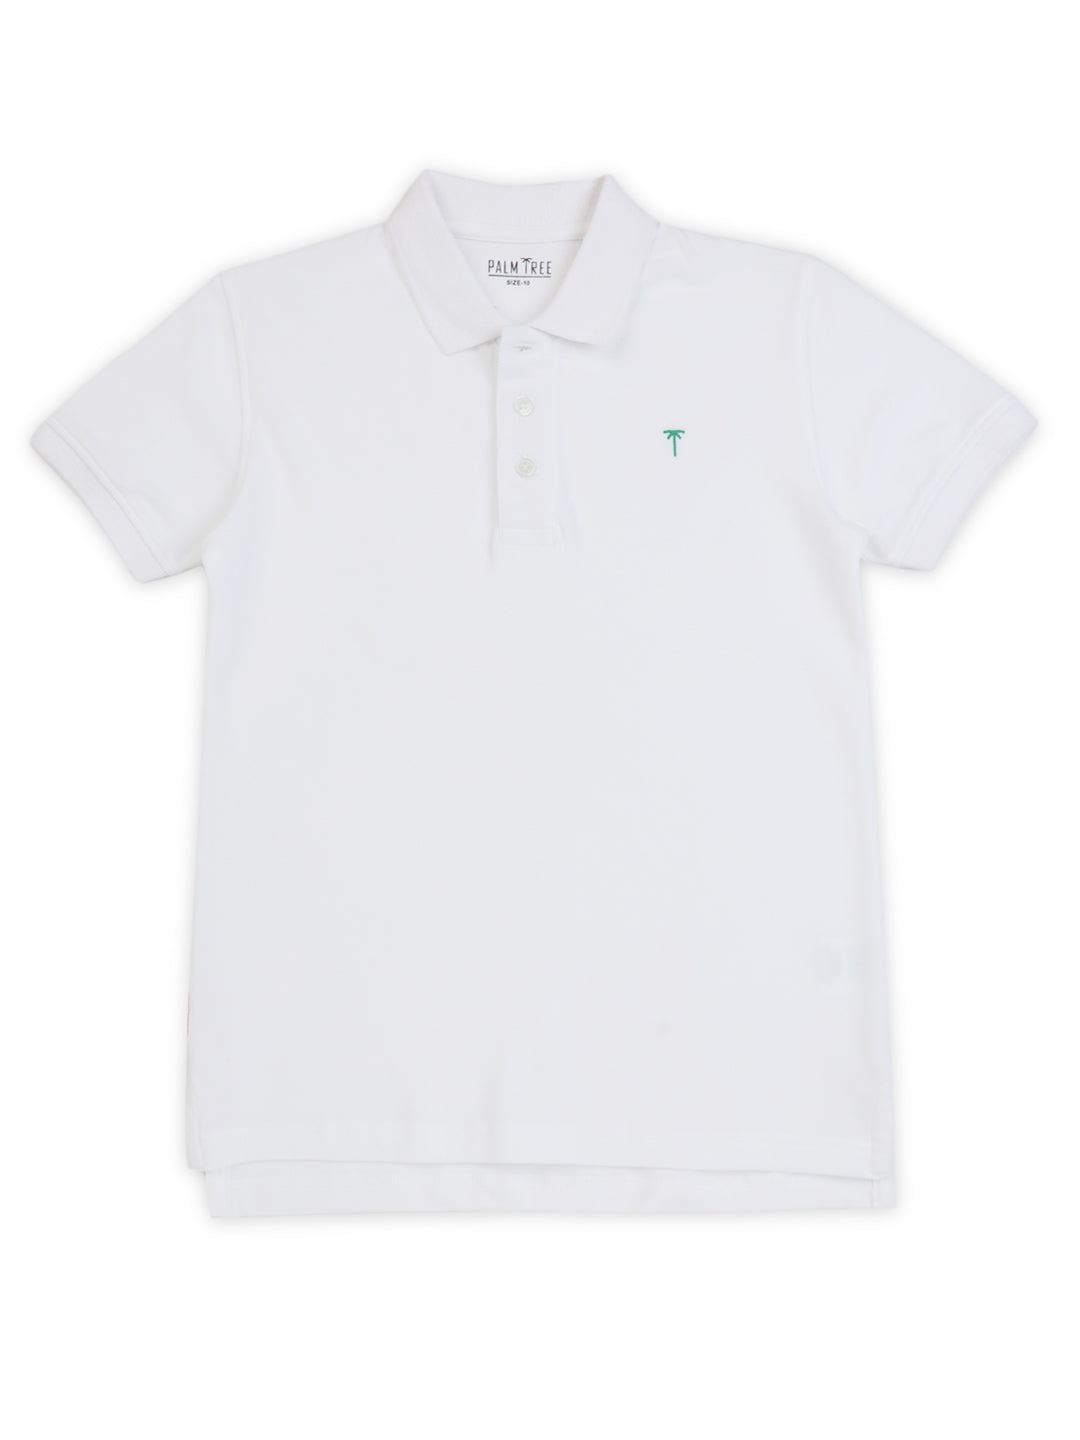 Boys White Solid Cotton Polo T-Shirt